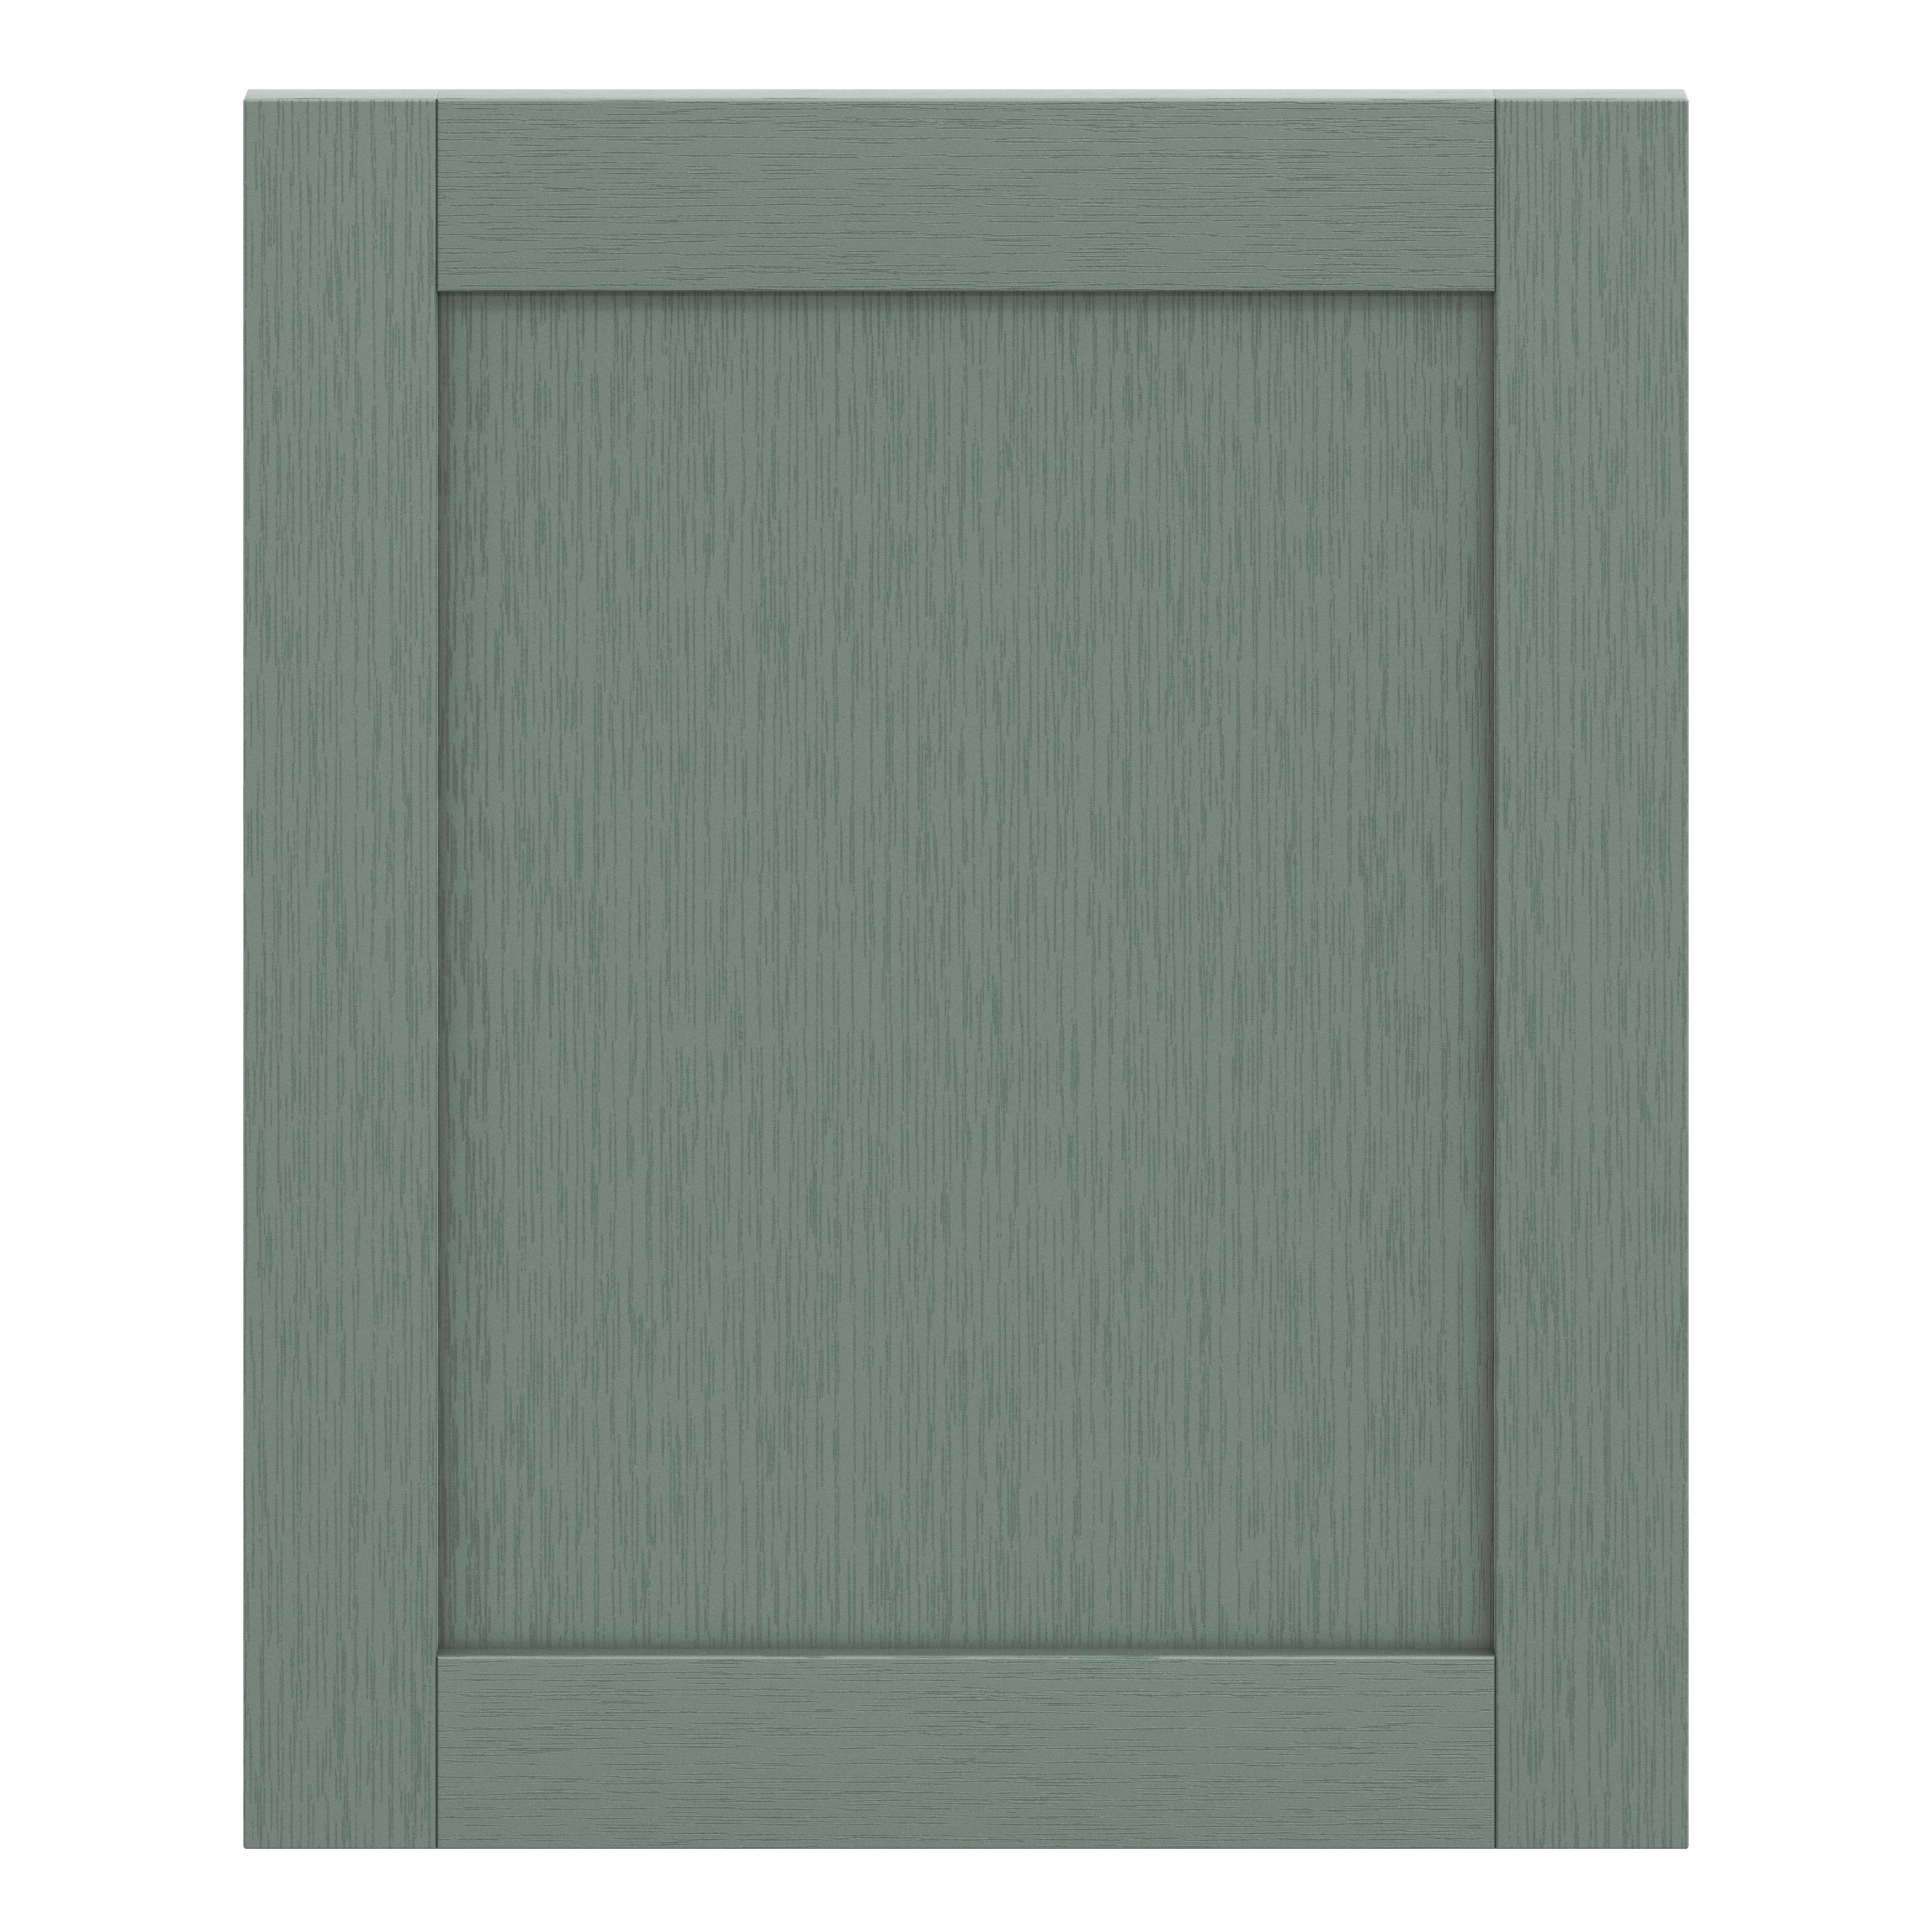 GoodHome Alpinia Matt Green Painted Wood Effect Shaker Tall appliance Cabinet door (W)600mm (H)723mm (T)18mm